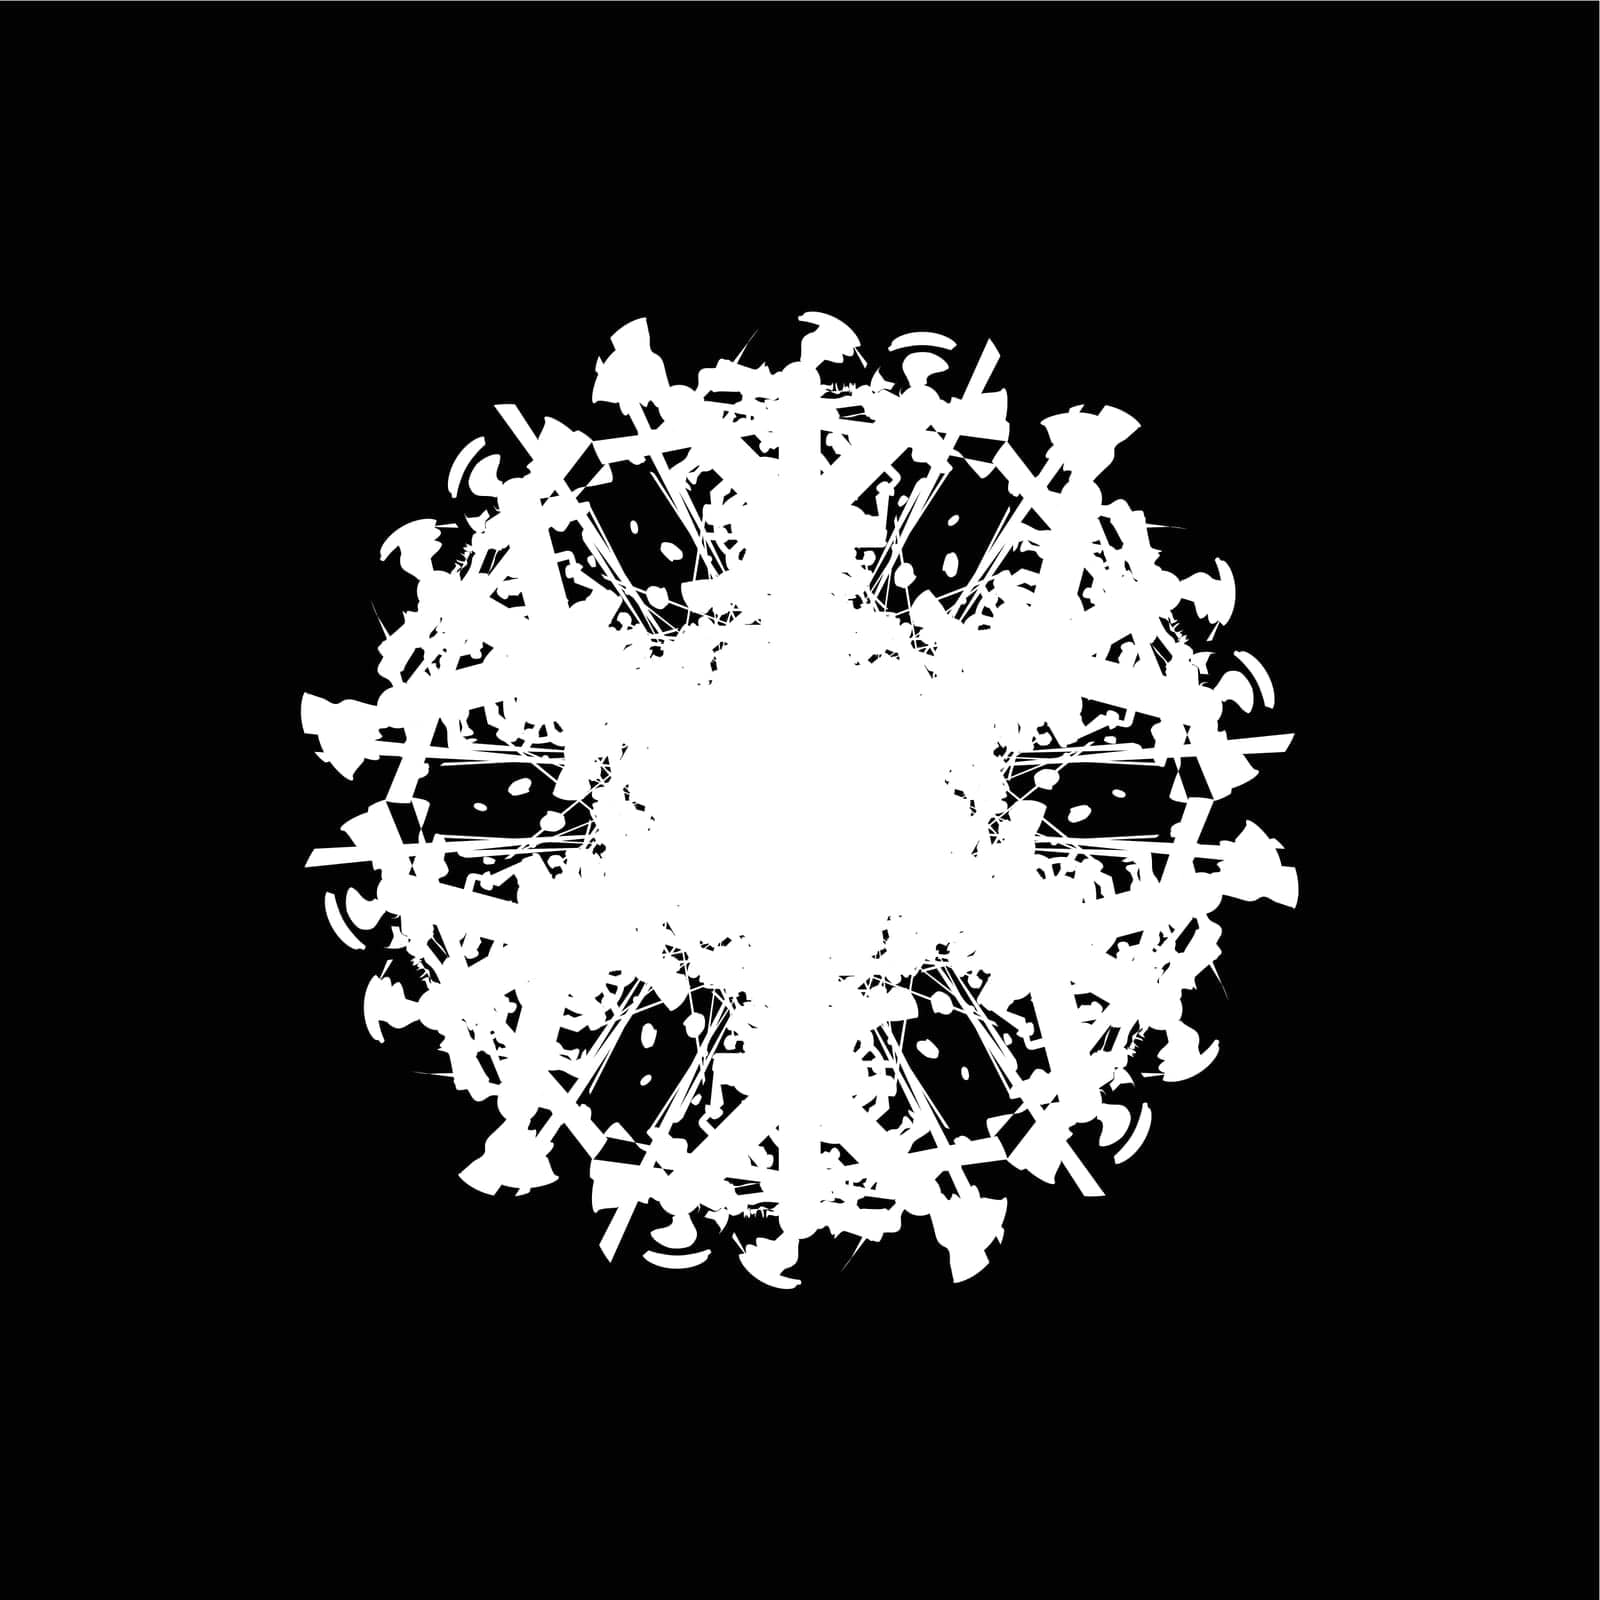 Grunge Isolated Snowflake by benjaminlion